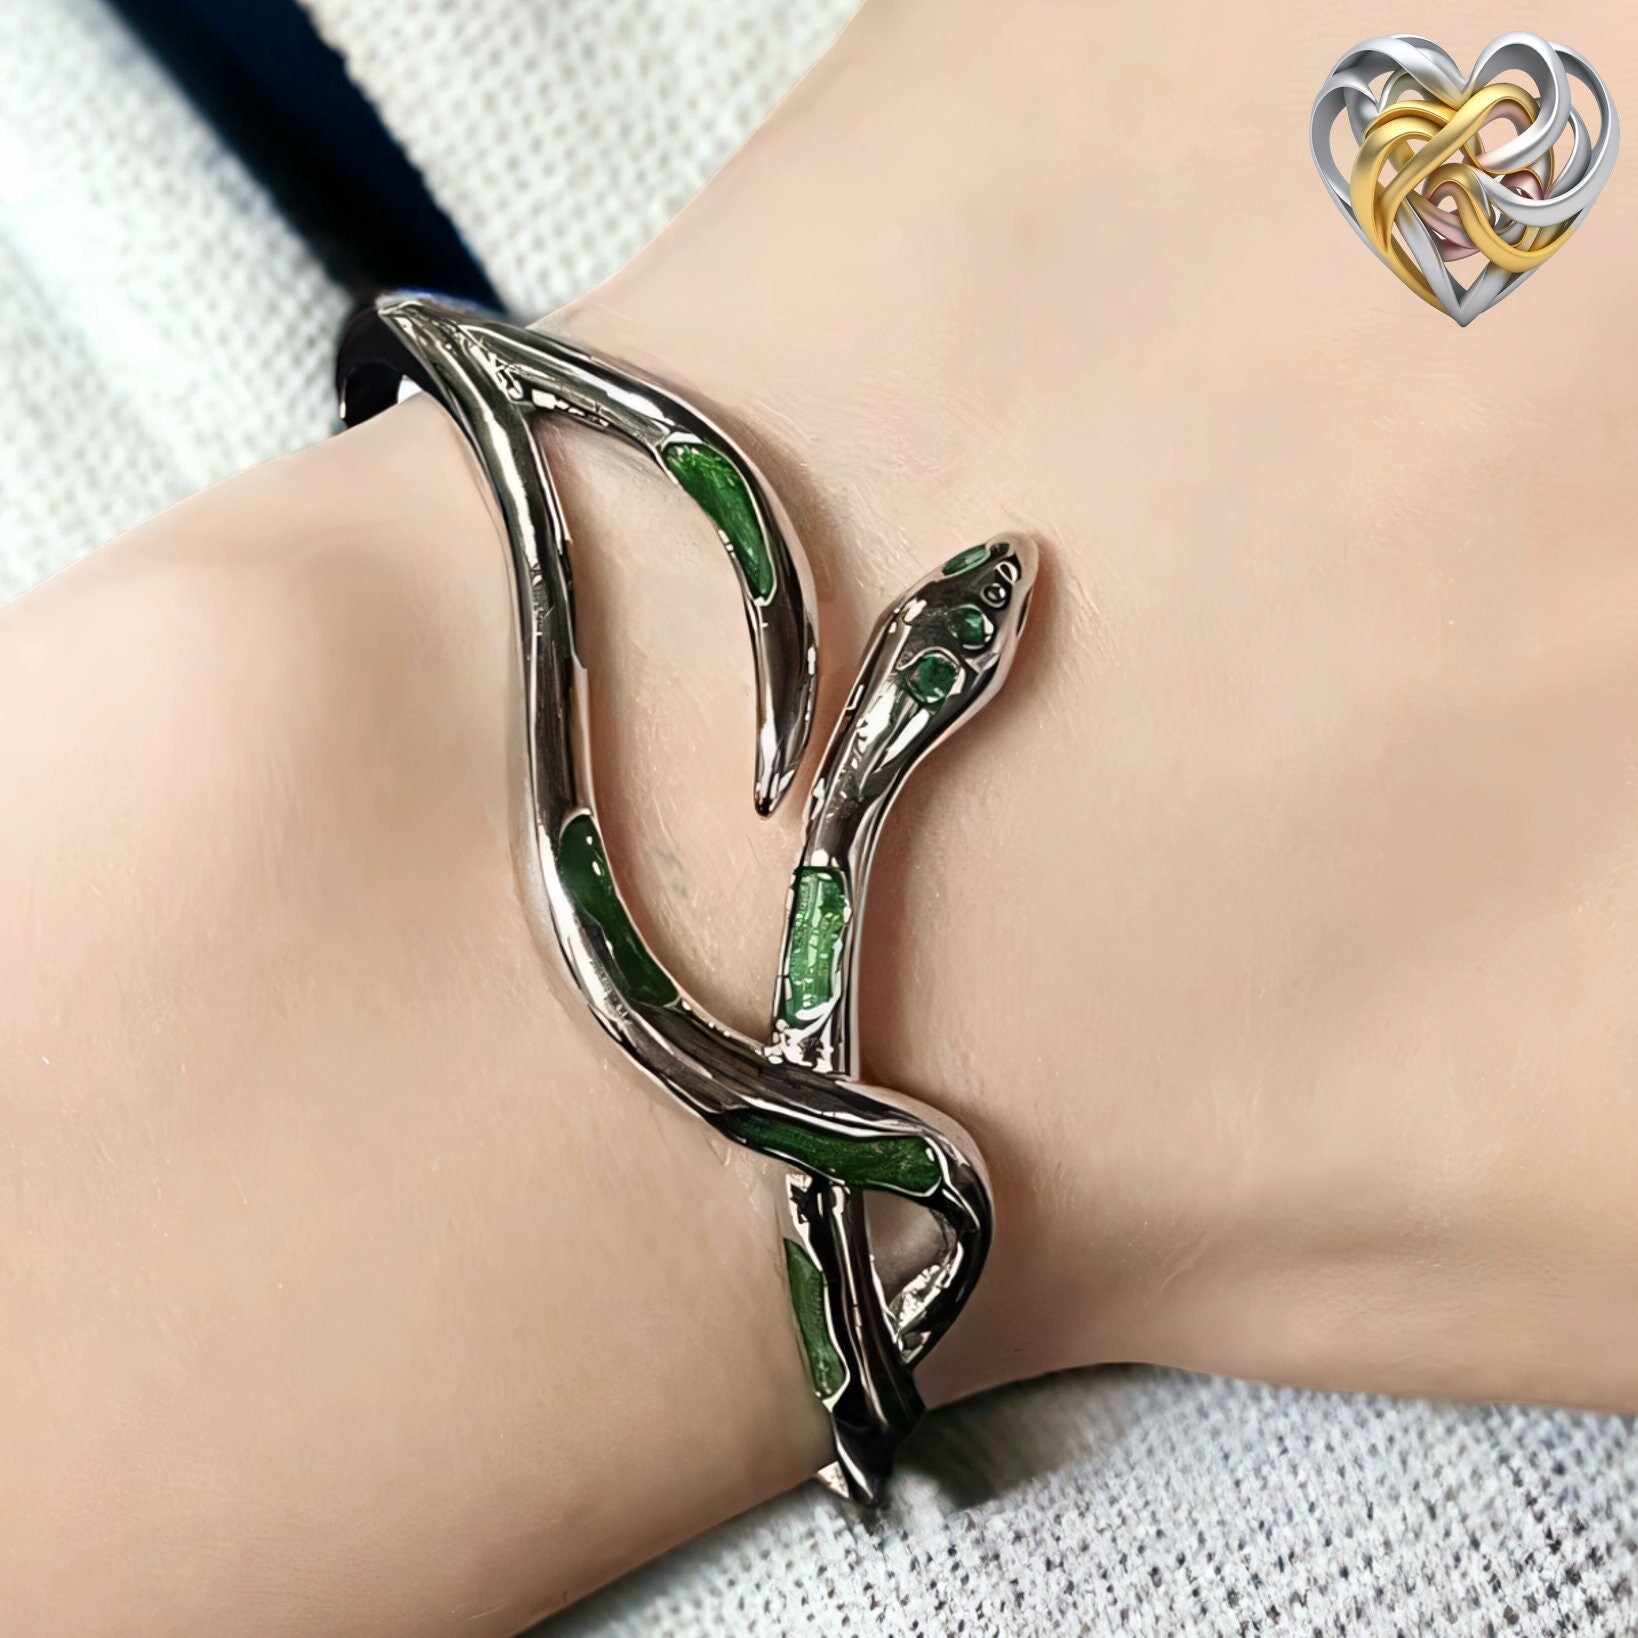 Luxury Cuff Python Leather Bracelets - Infinity Red Python Golden